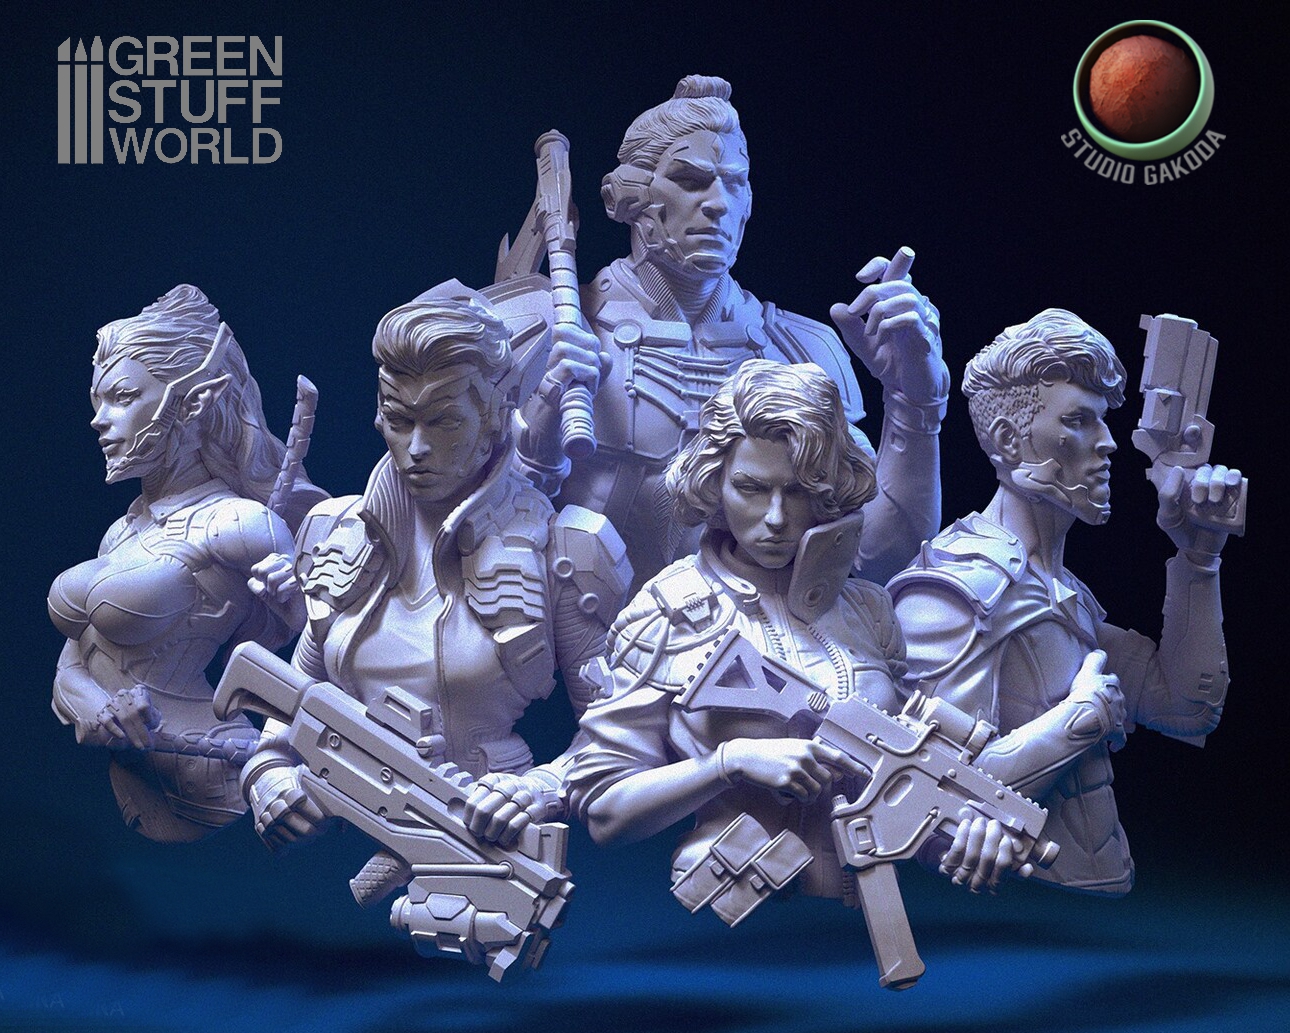 Studio Gakoda Miniatures - Bustes et figurines 3D